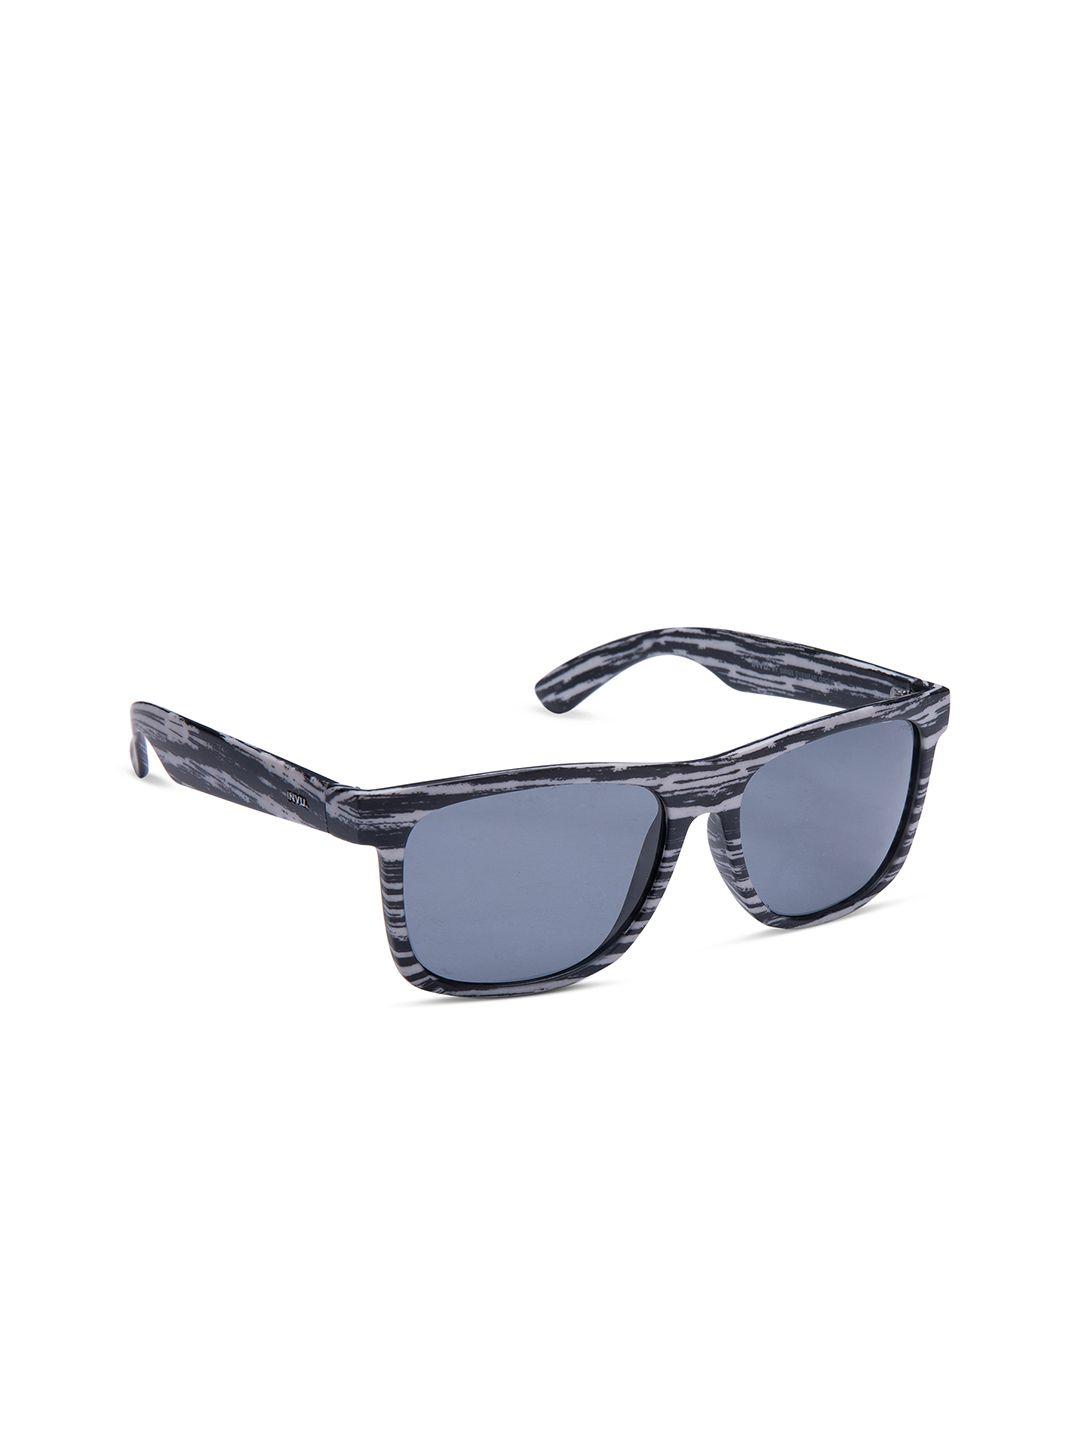 invu men square sunglasses b2637c